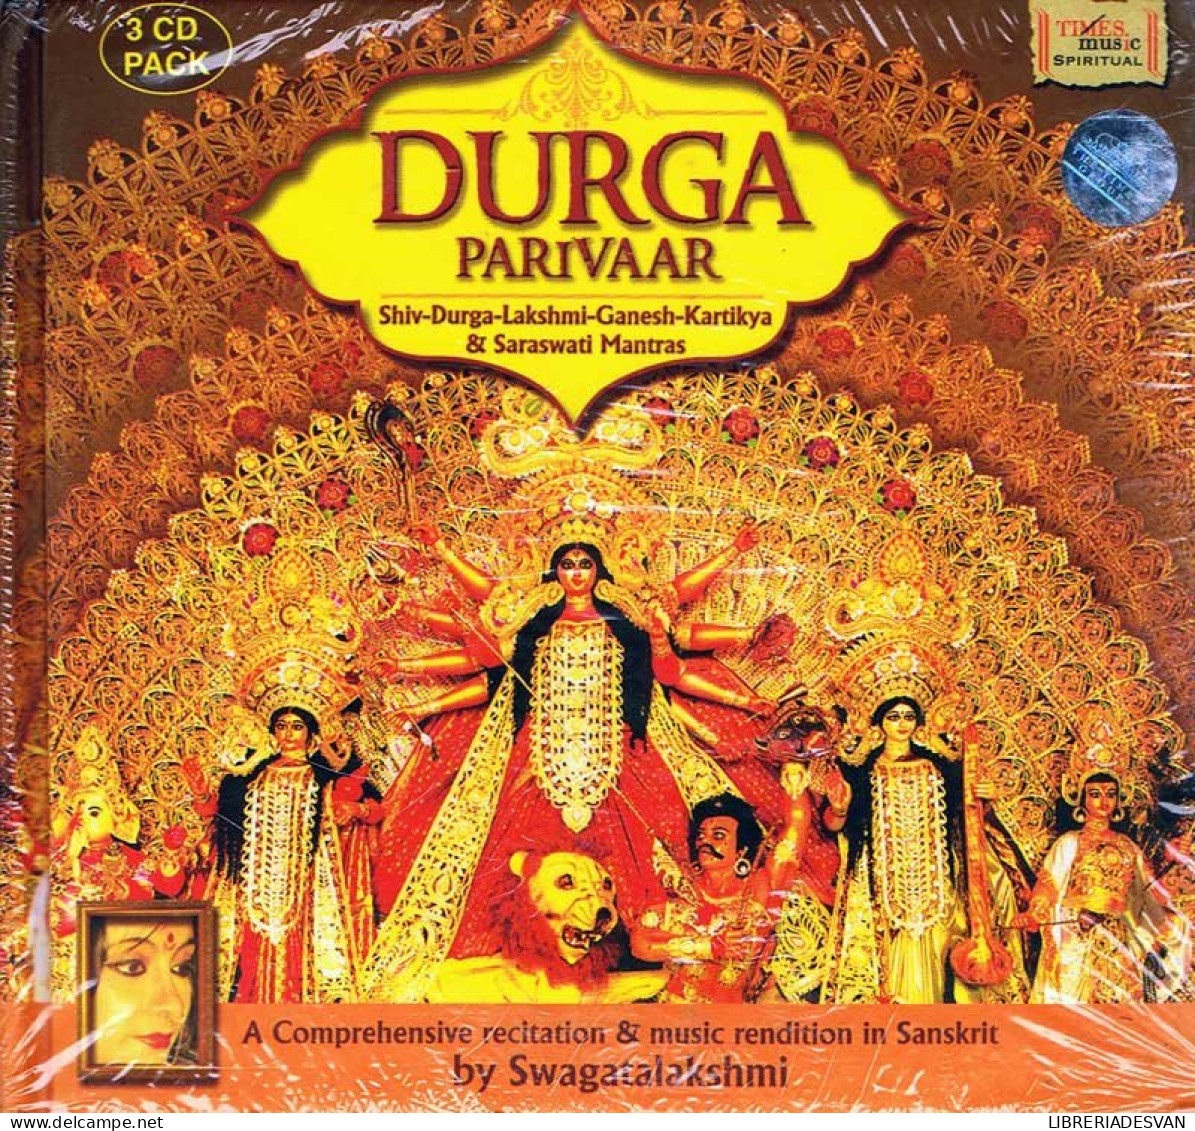 Swagatalakshmi - Durga Parivaar. 3 CD Pack - New Age